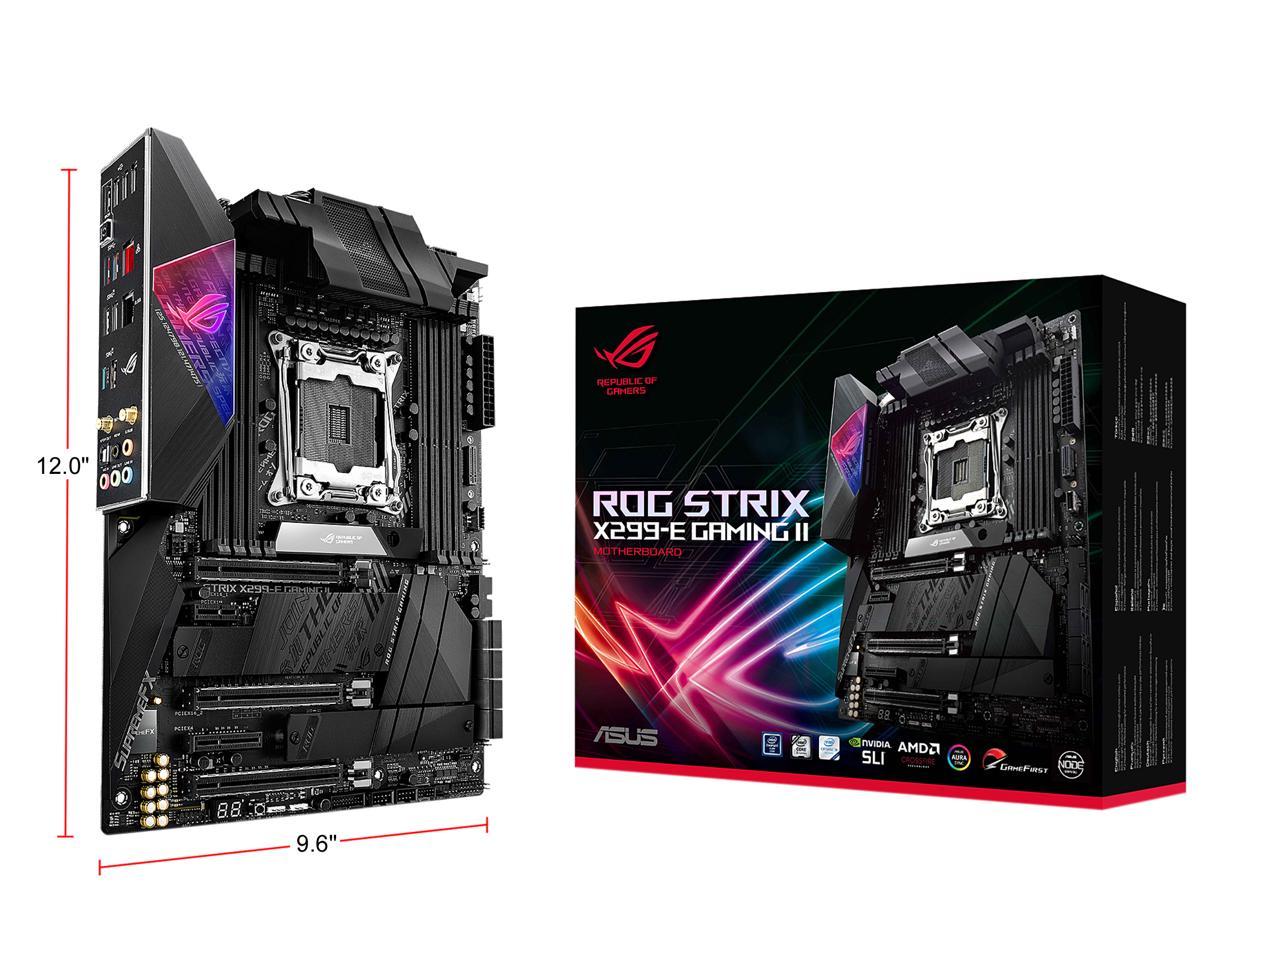 ASUS ROG Strix X299-E Gaming II LGA 2066 ATX Intel Motherboard - Newegg.com